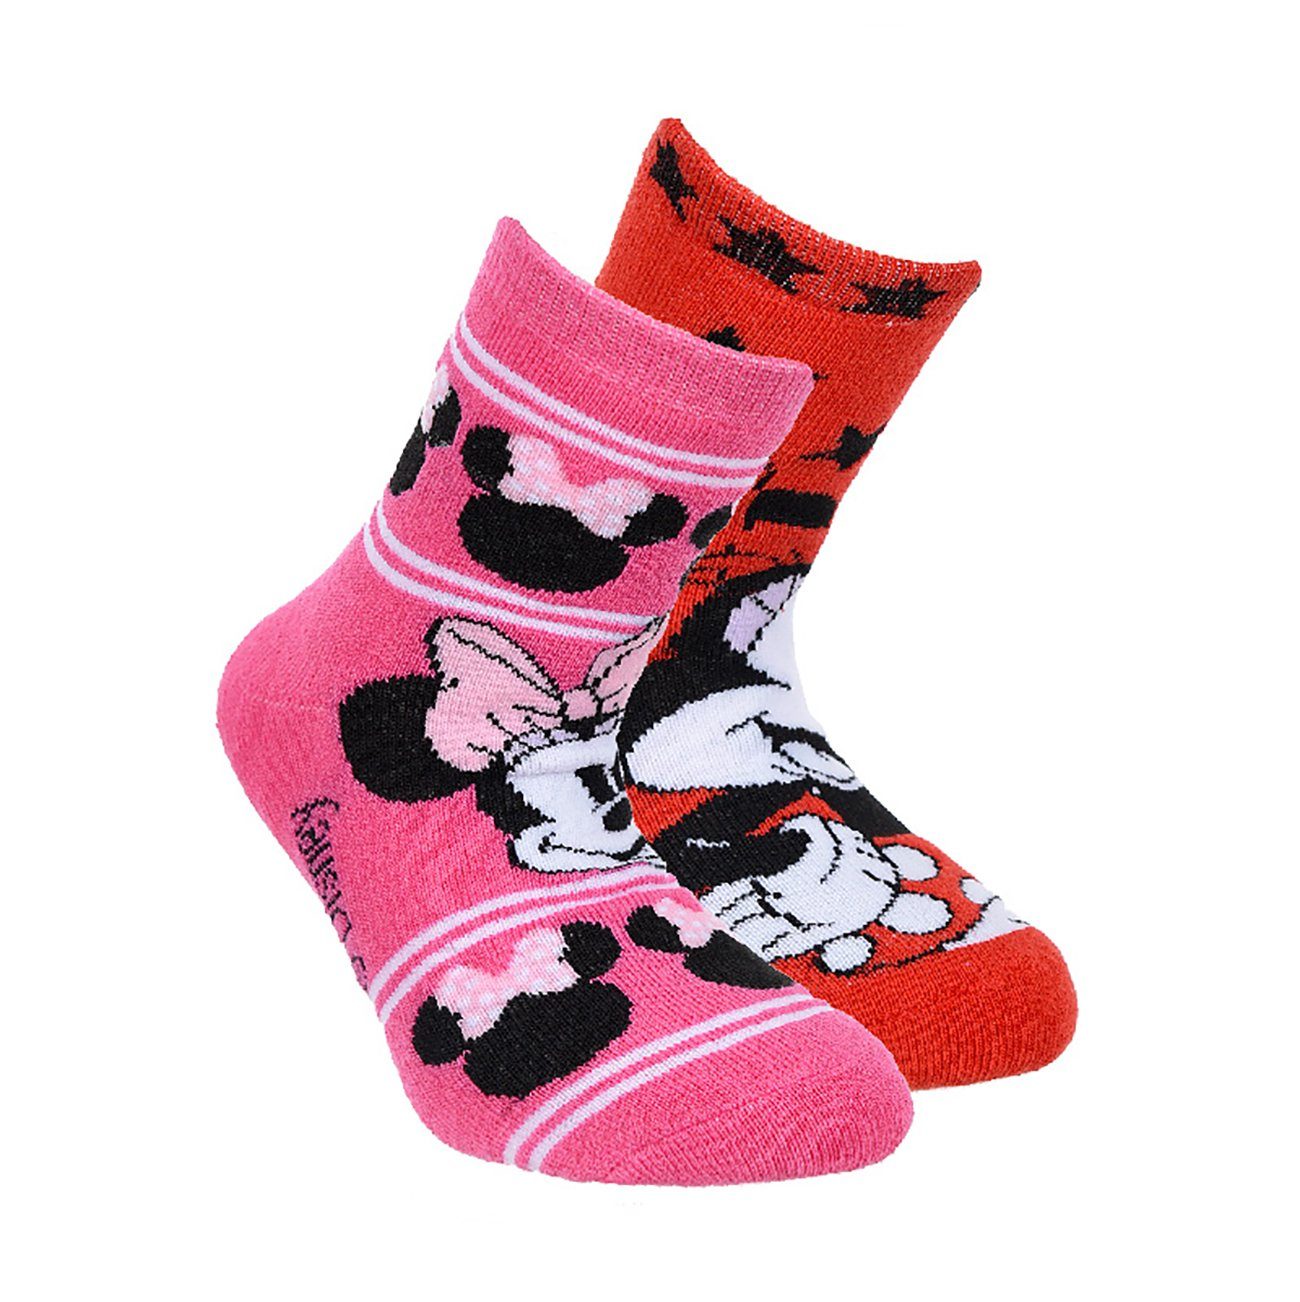 Disney Minnie Mouse Socken Kinder Socken, Antirutsch, 2er Pack, rot/pink